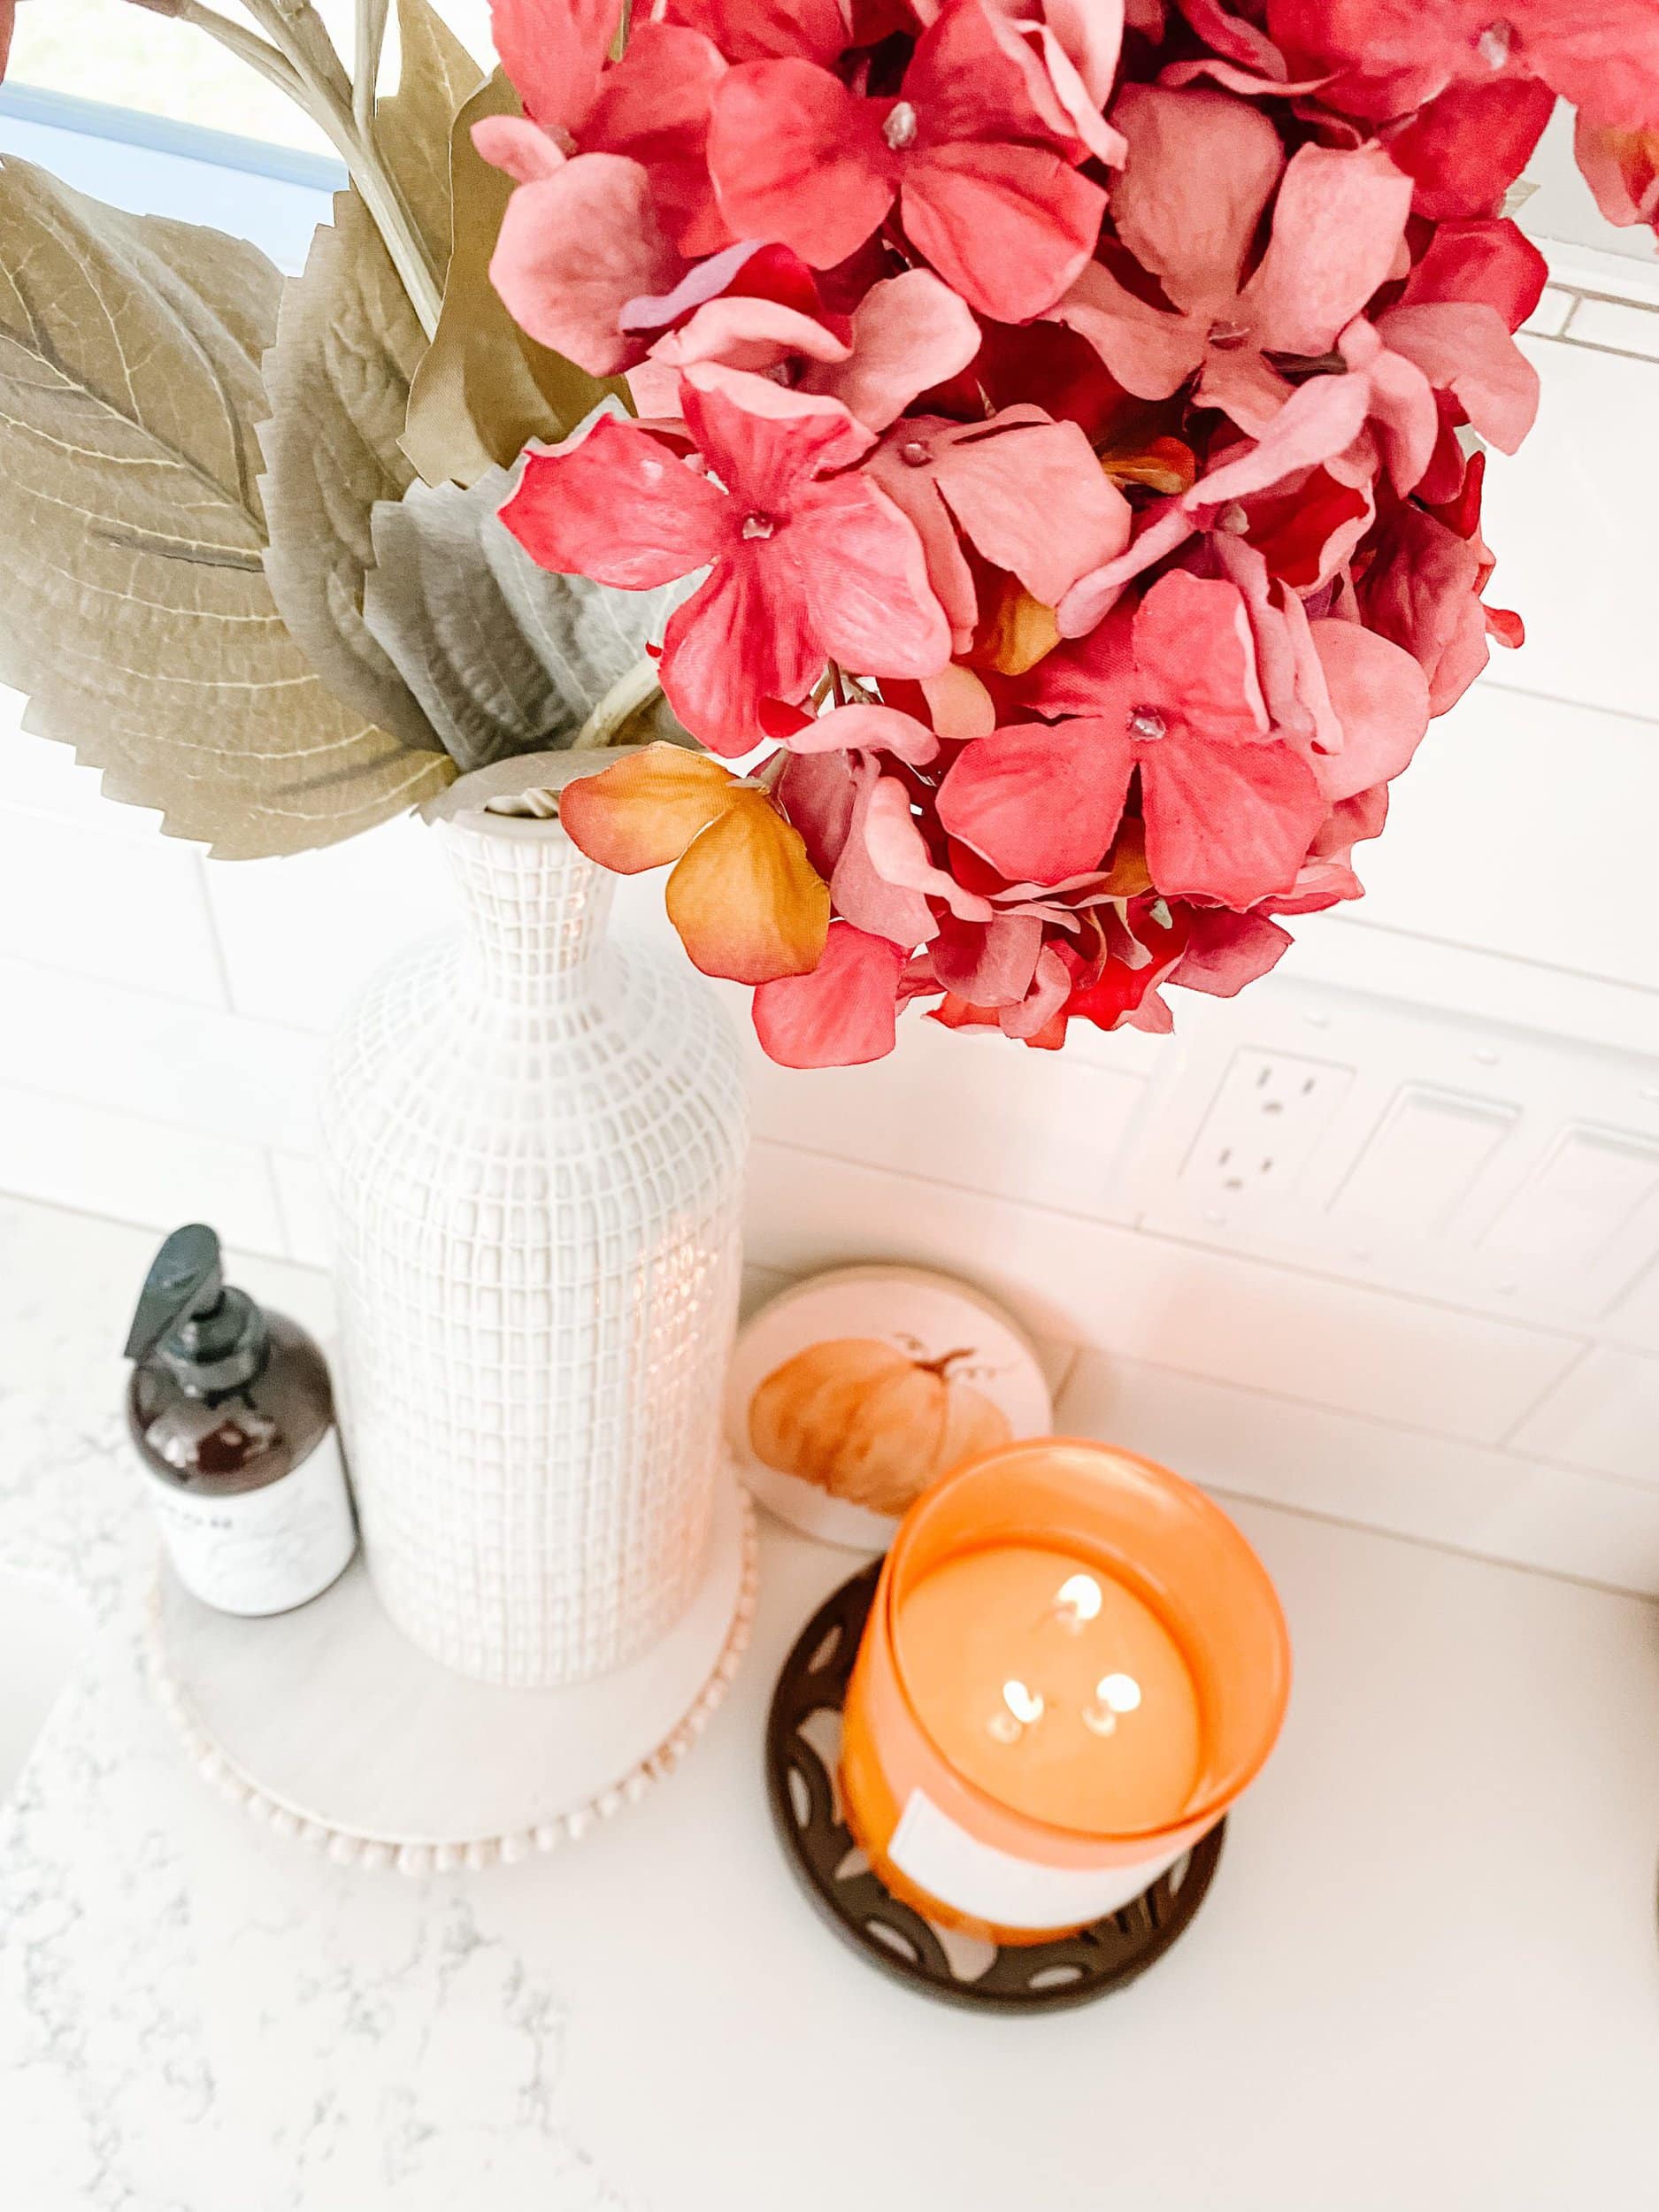 Faux berry colored hydrangea stems, magnolia home soap, ceramic vase, white riser, and pumpkin candle burning on a white quartz countertop